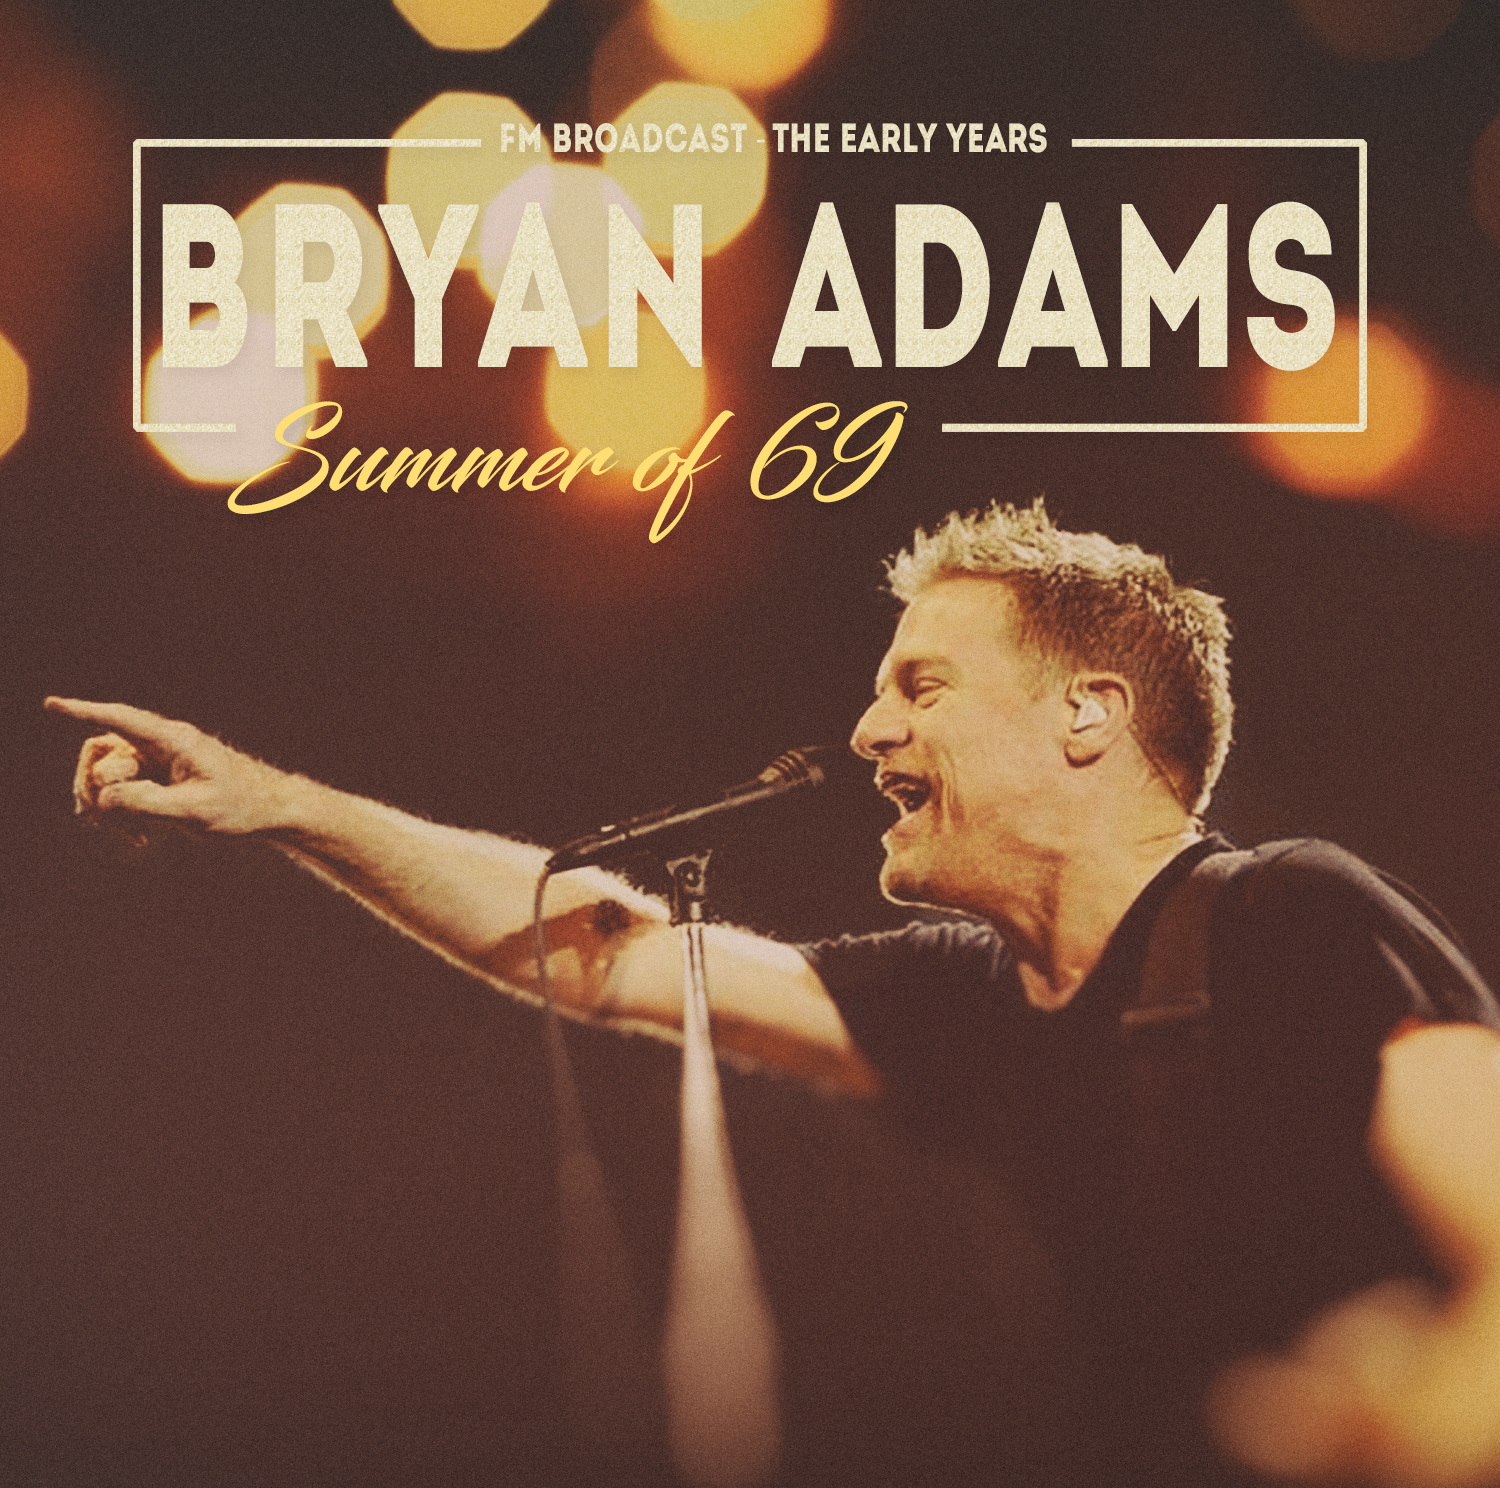 bryan adams summer of 69 mp3 download